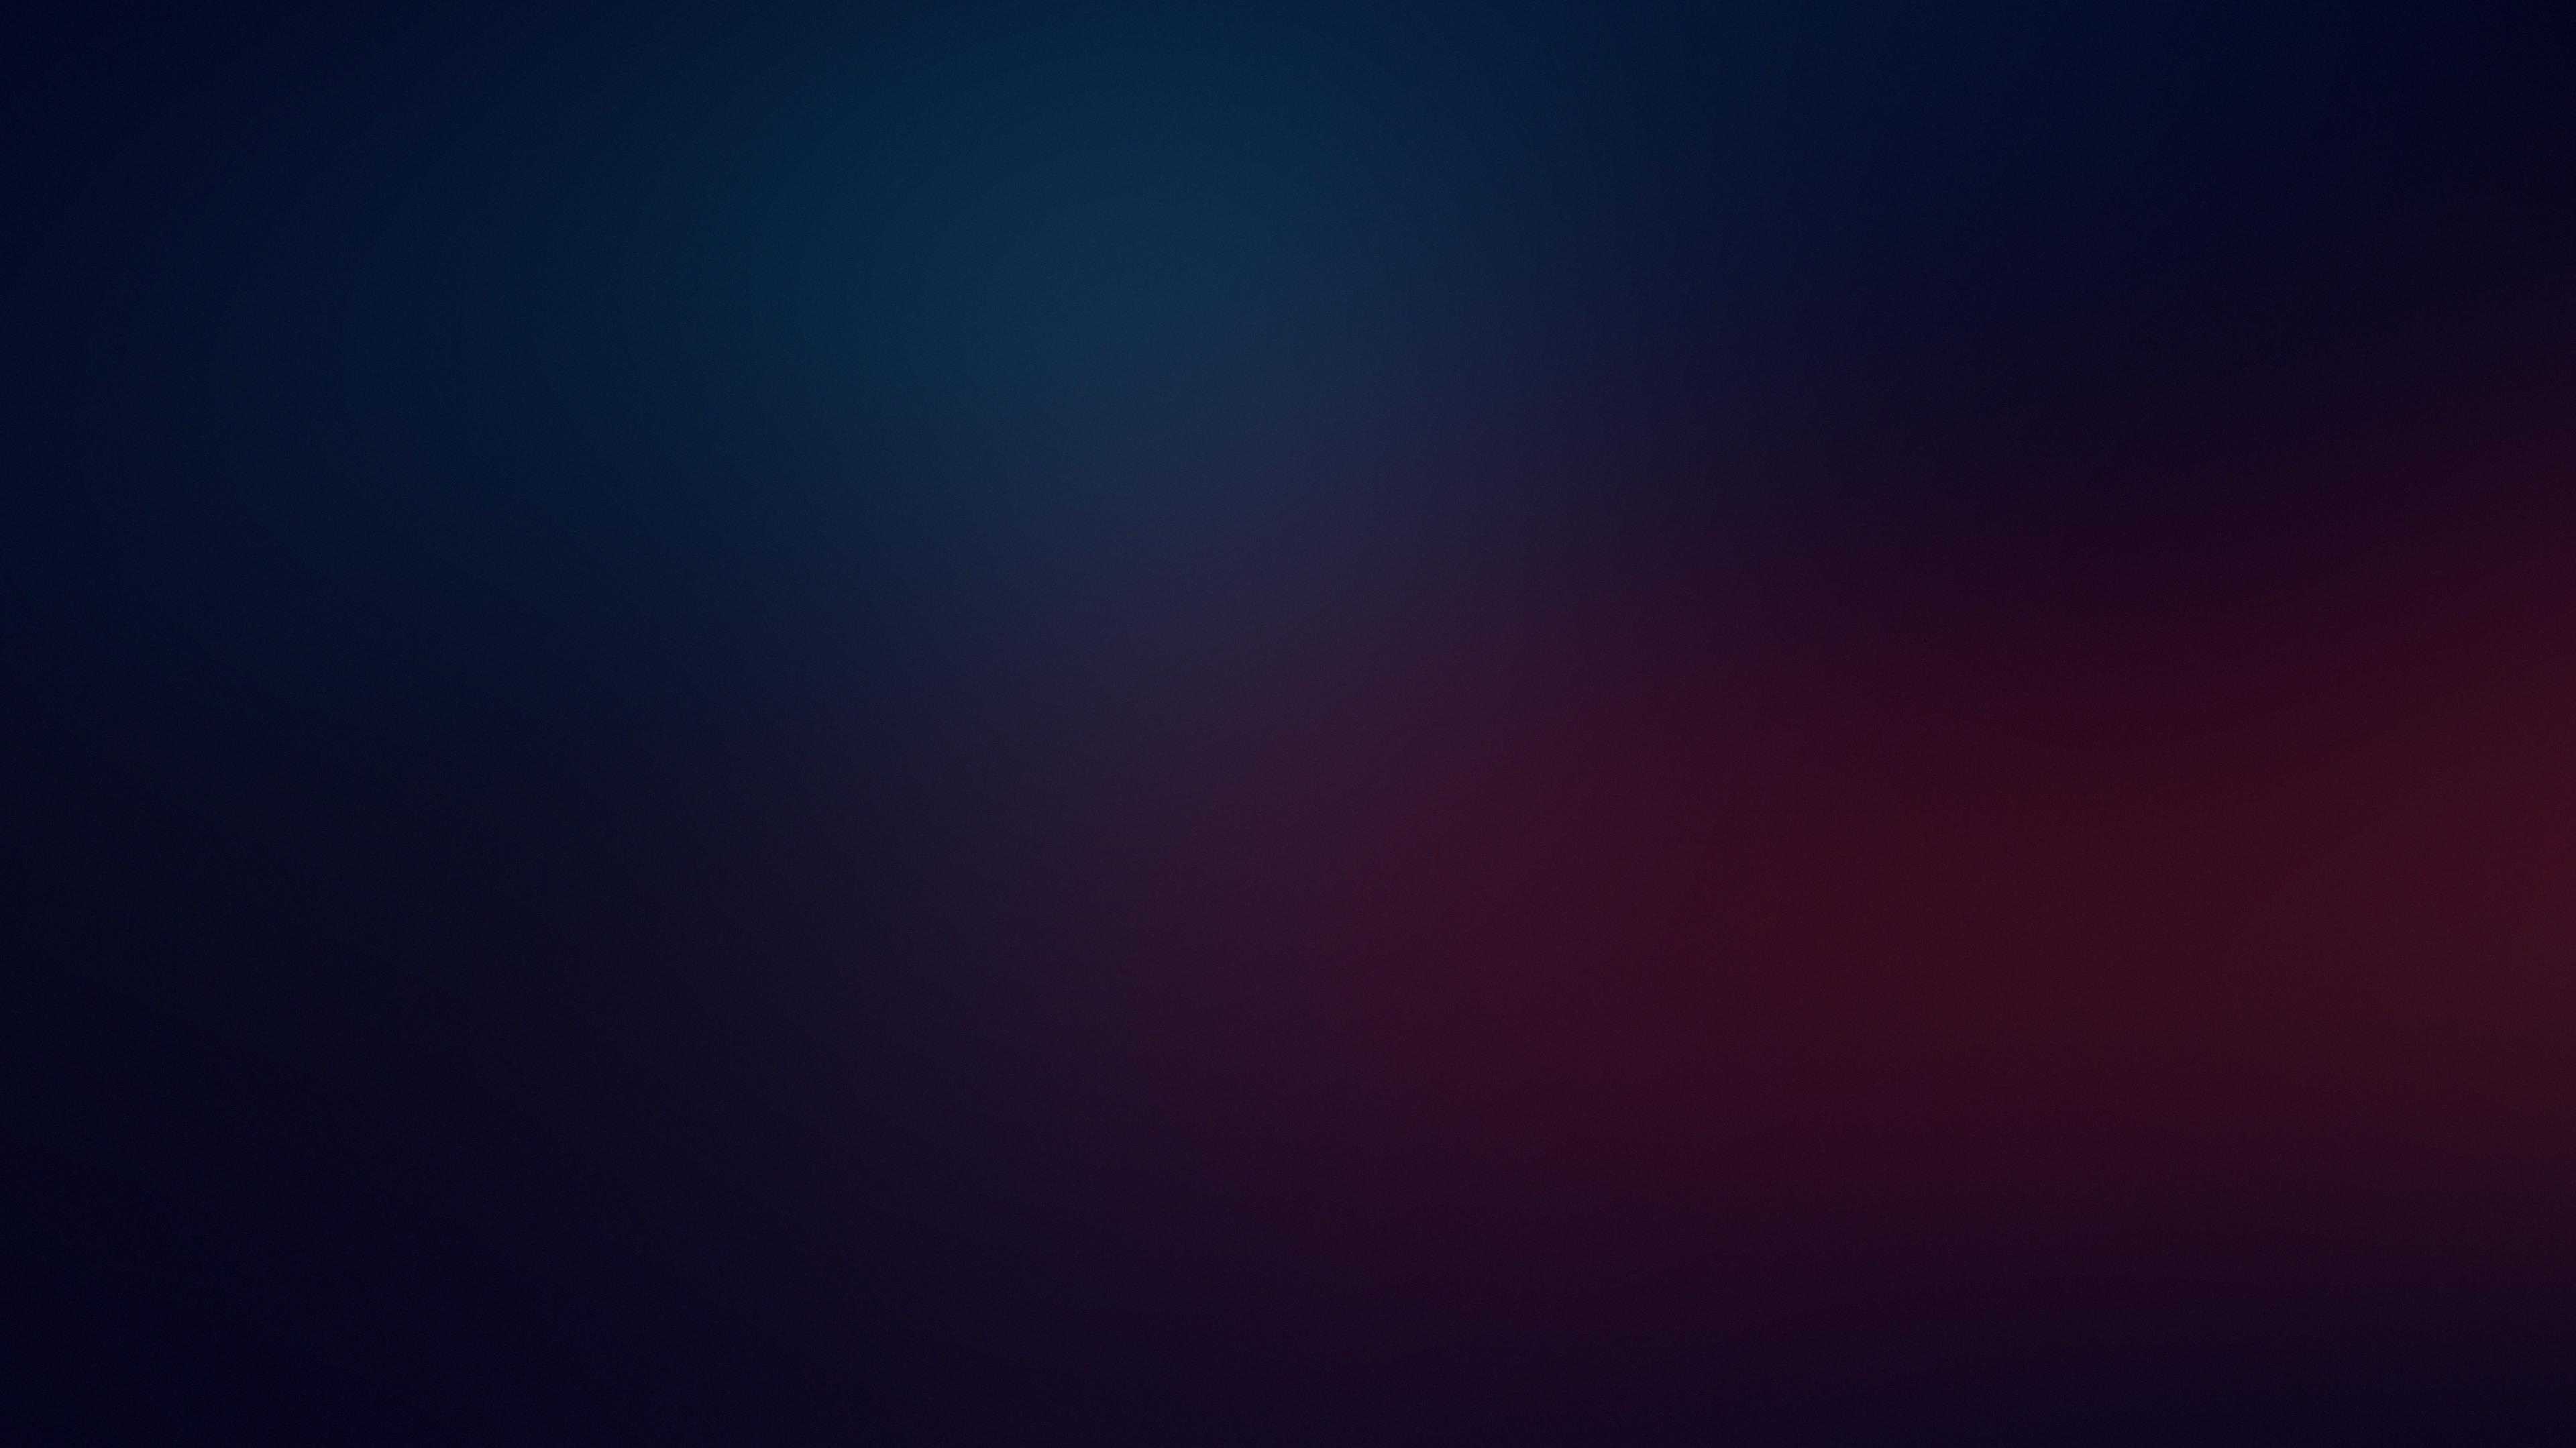 Wallpaper 4k Dark Blur Abstract